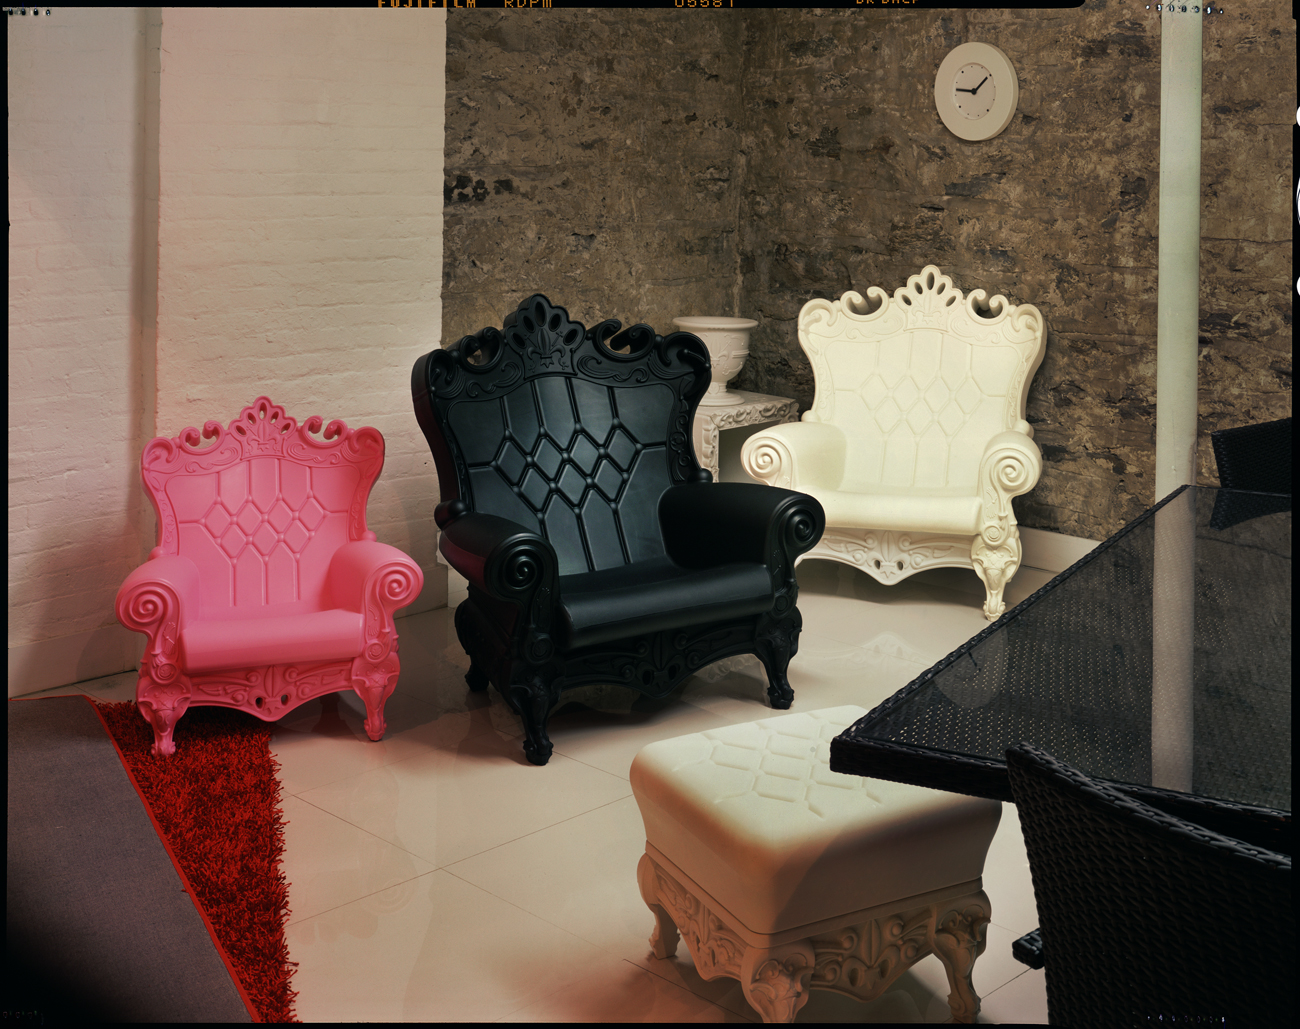 Molded polyurethane chairs, furniture store basement, New York City, 2015